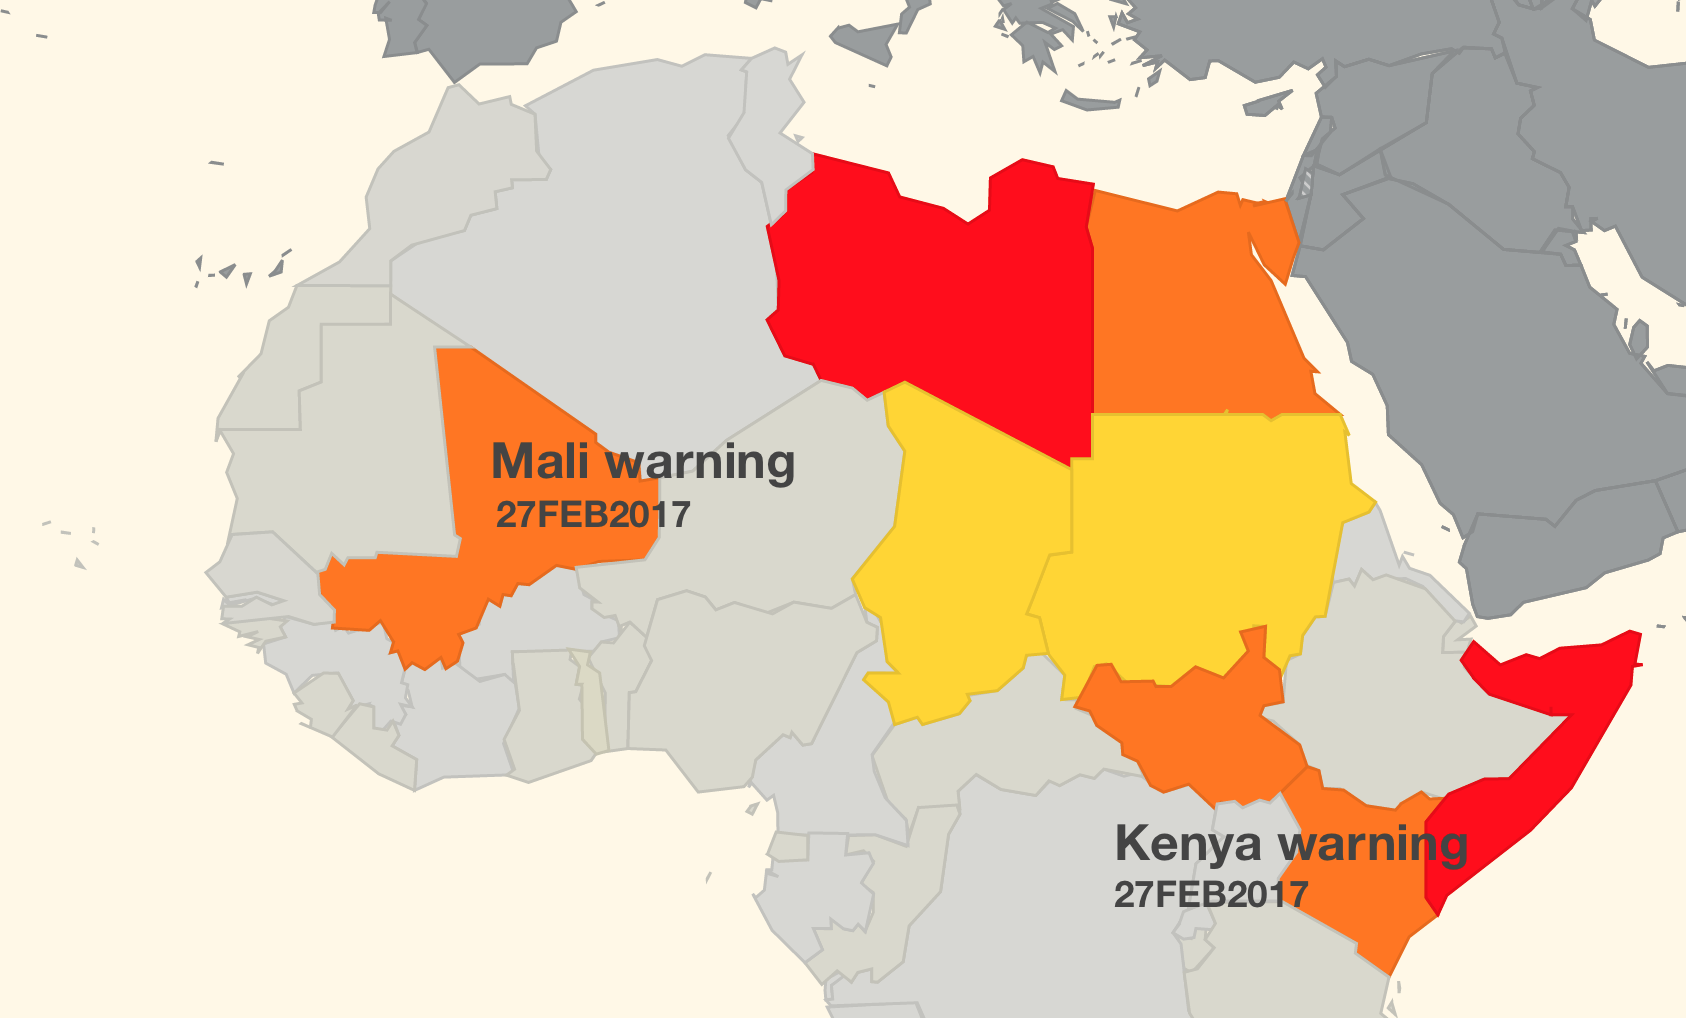 Fresh warnings as FAA clarifies weapons risk in Kenya, Mali airspace